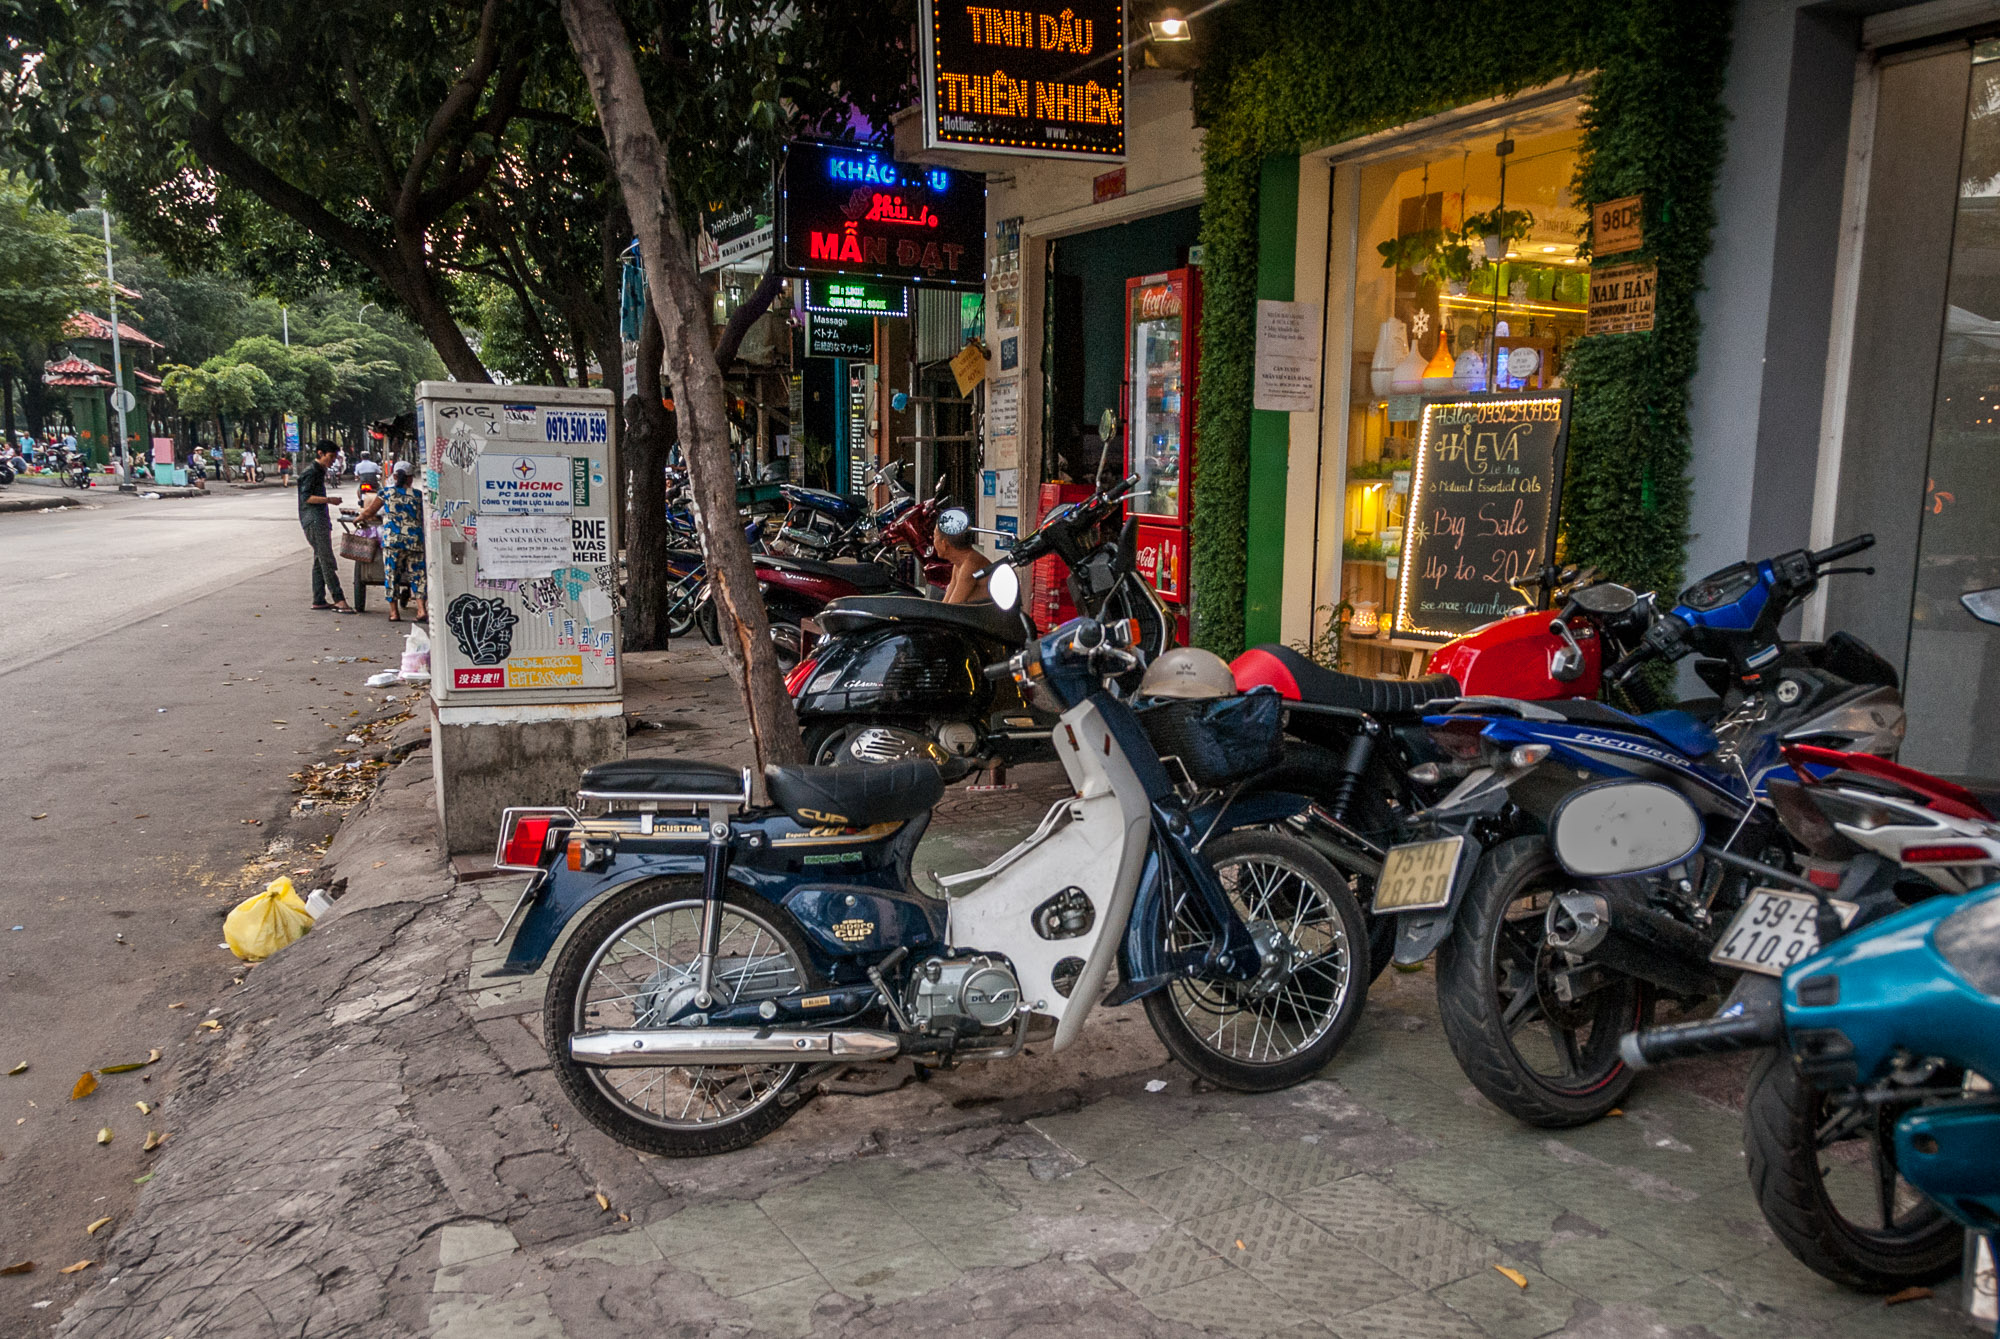 Motorbikes parked on sidewalk